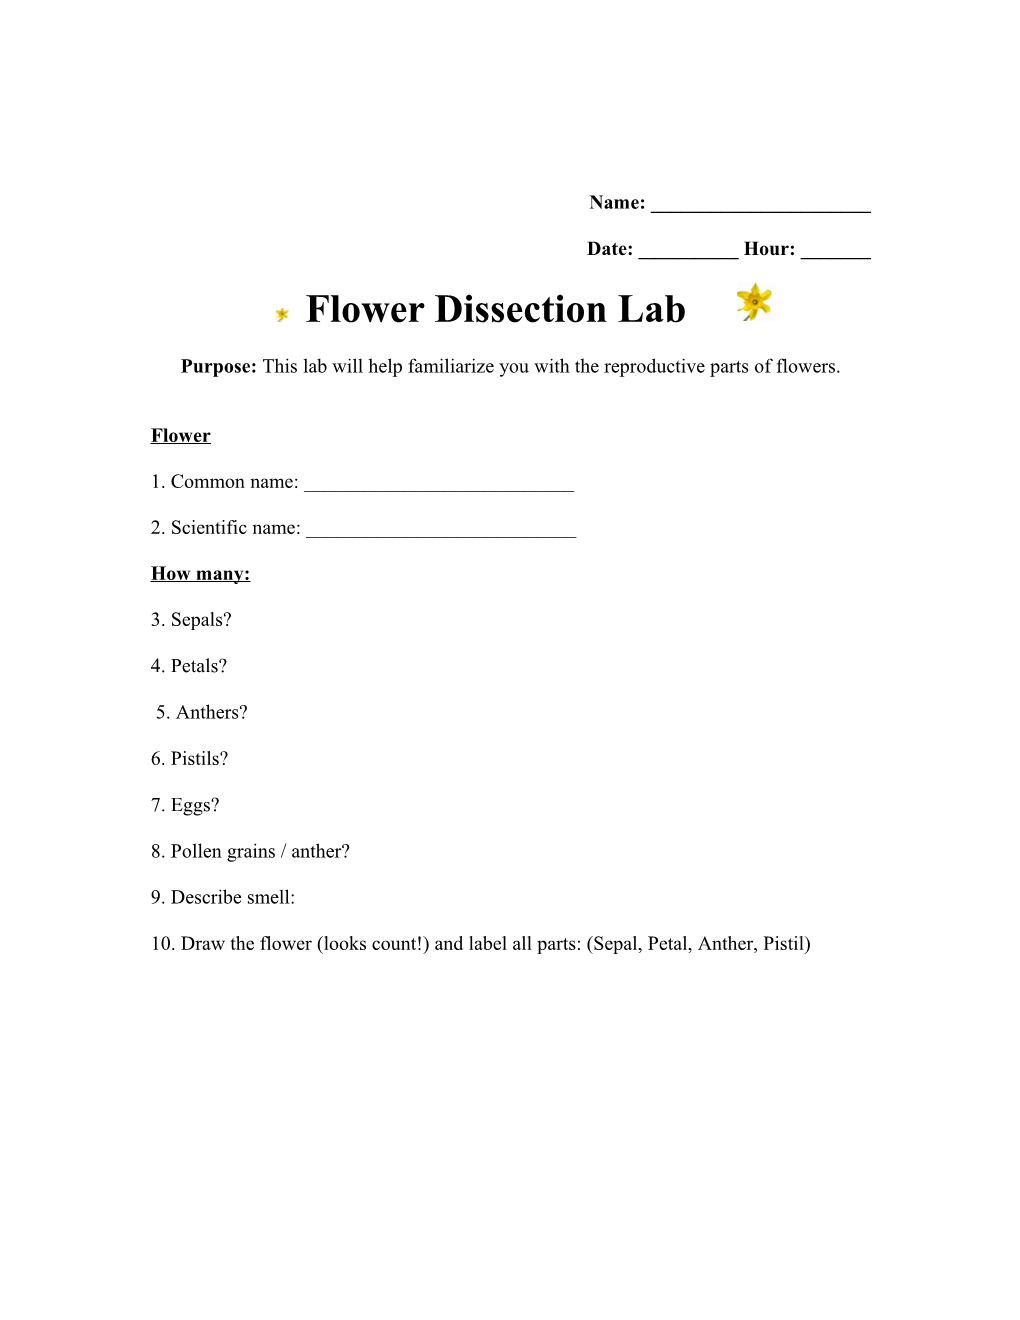 Flower Dissection Lab (Part 1)